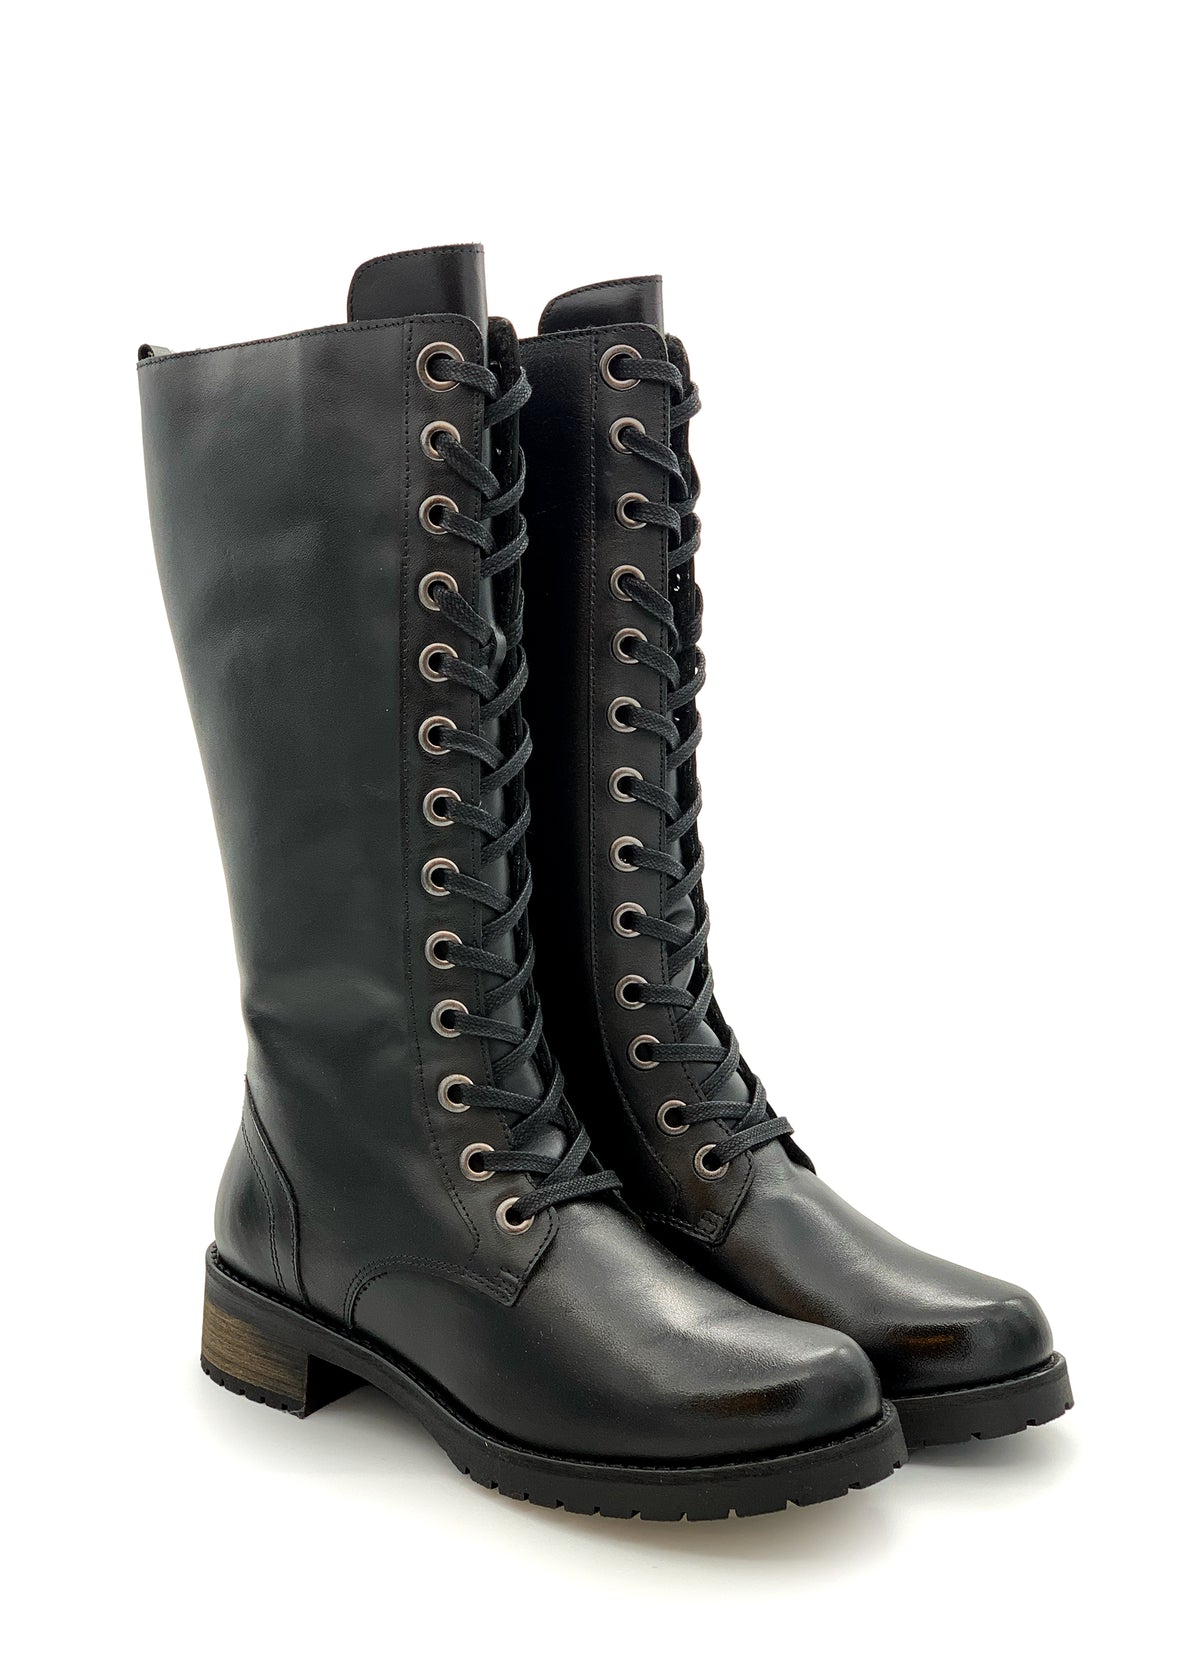 Maihari boots - Lotta, black